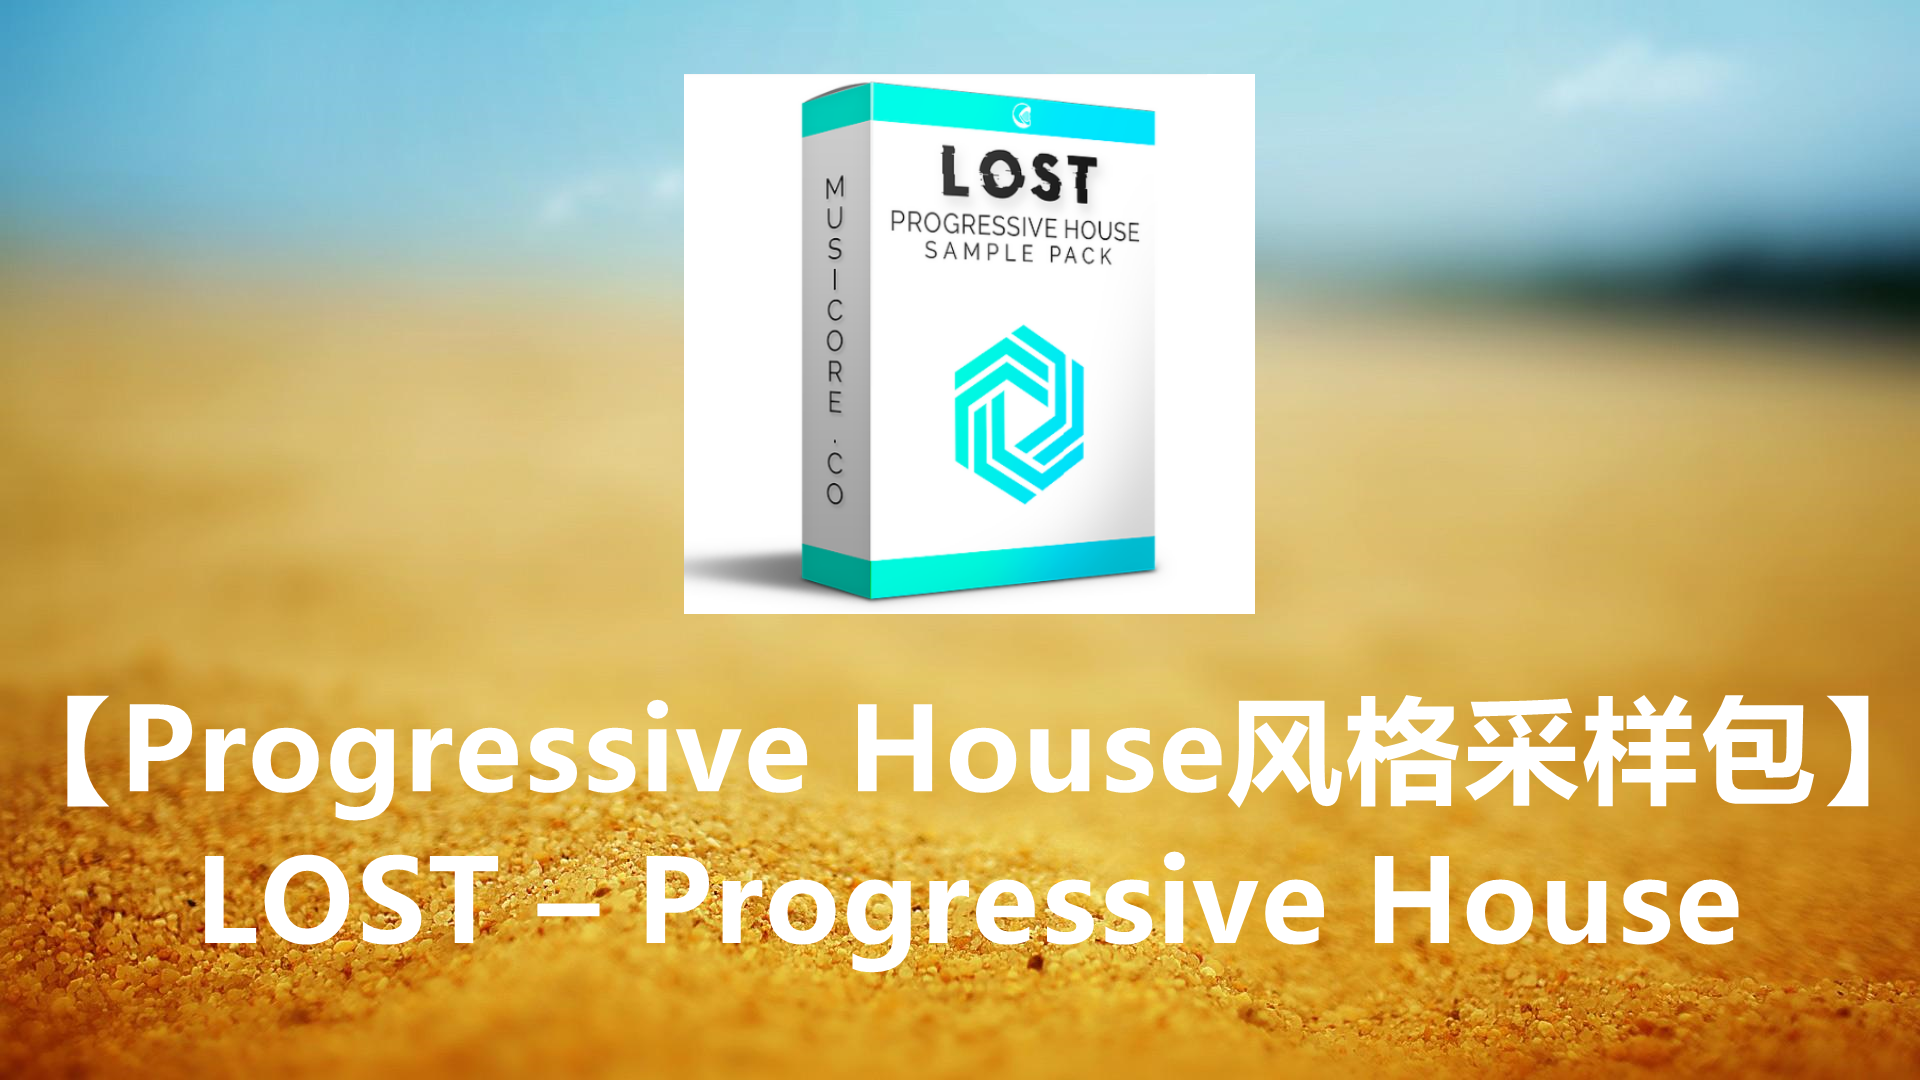 【Progressive House风格采样包】LOST – Progressive House 风格采样包 LOST